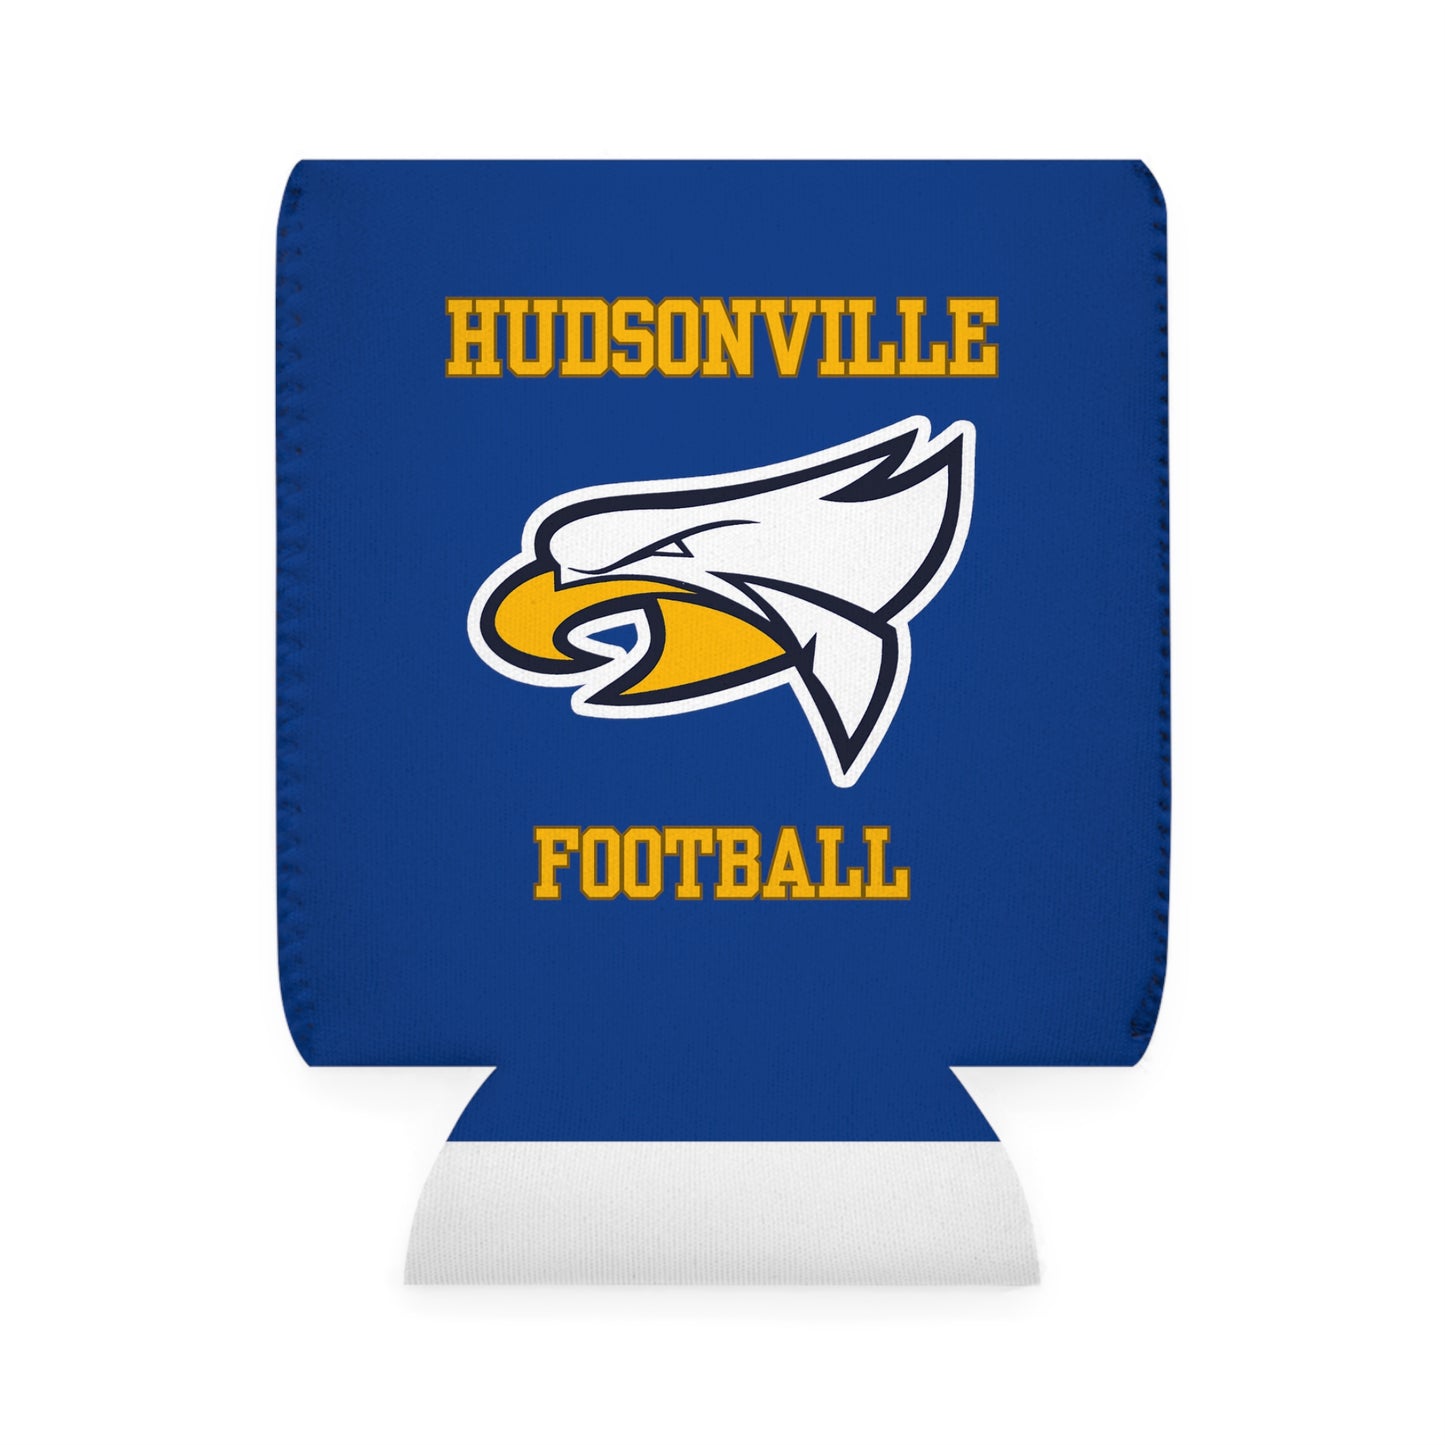 Hudsonville Football Blue Can Cooler Sleeve